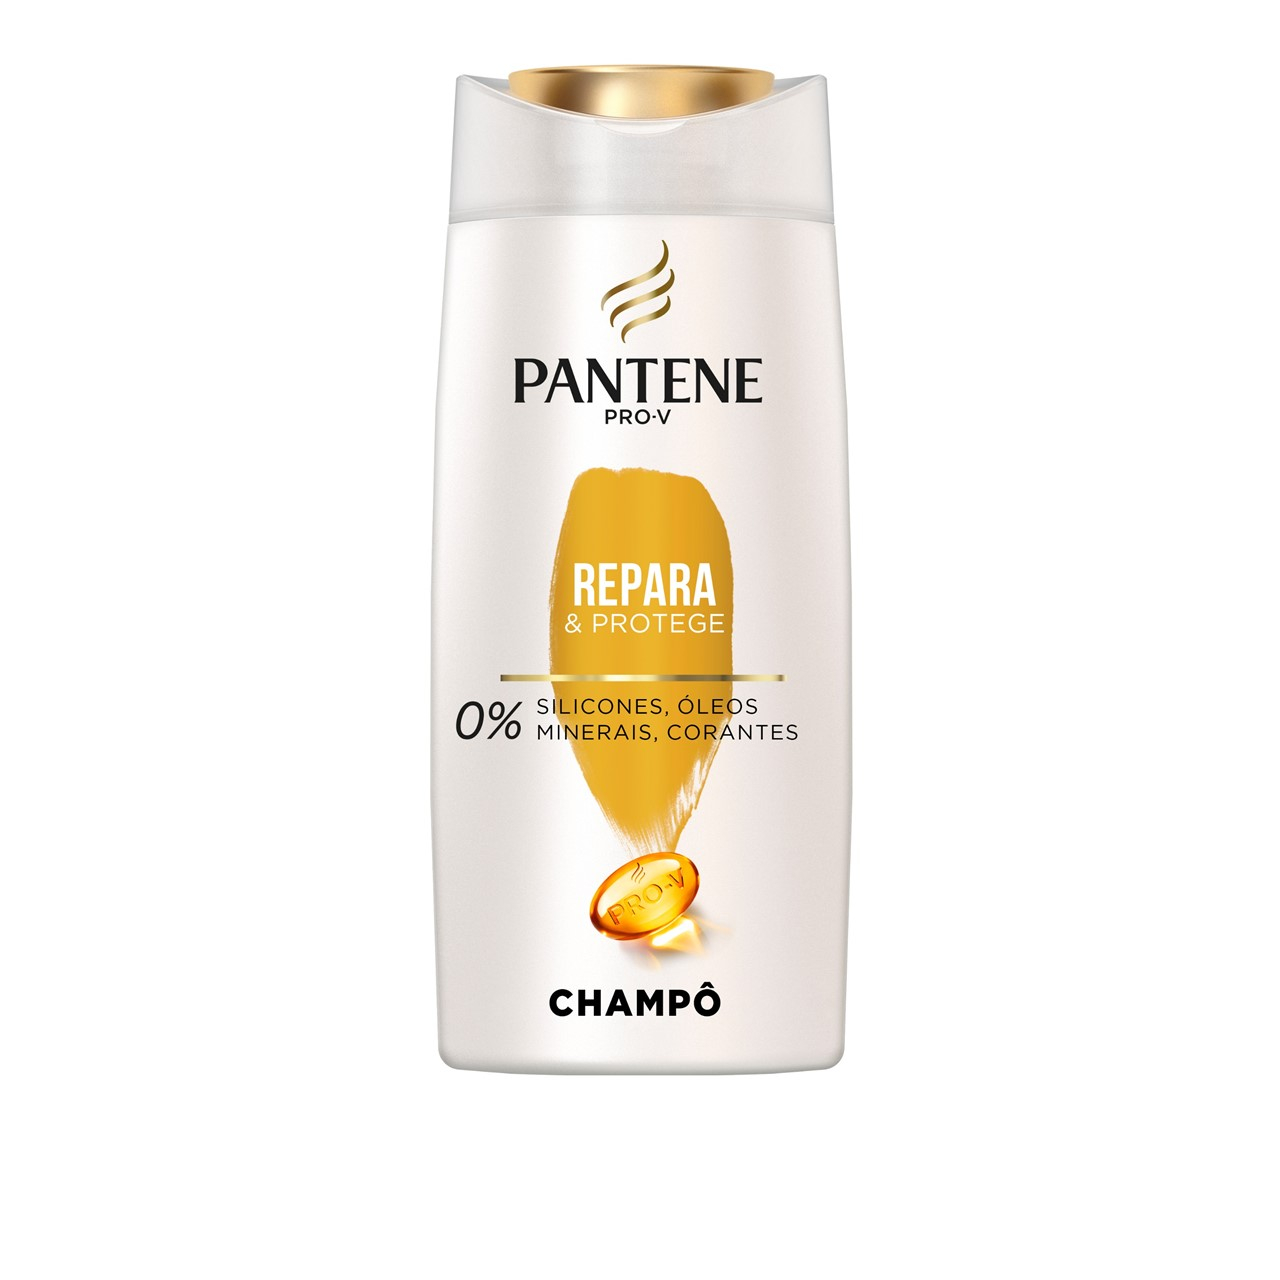 Pantene Pro-V Repair & Protect Shampoo 675ml (22.82fl oz)